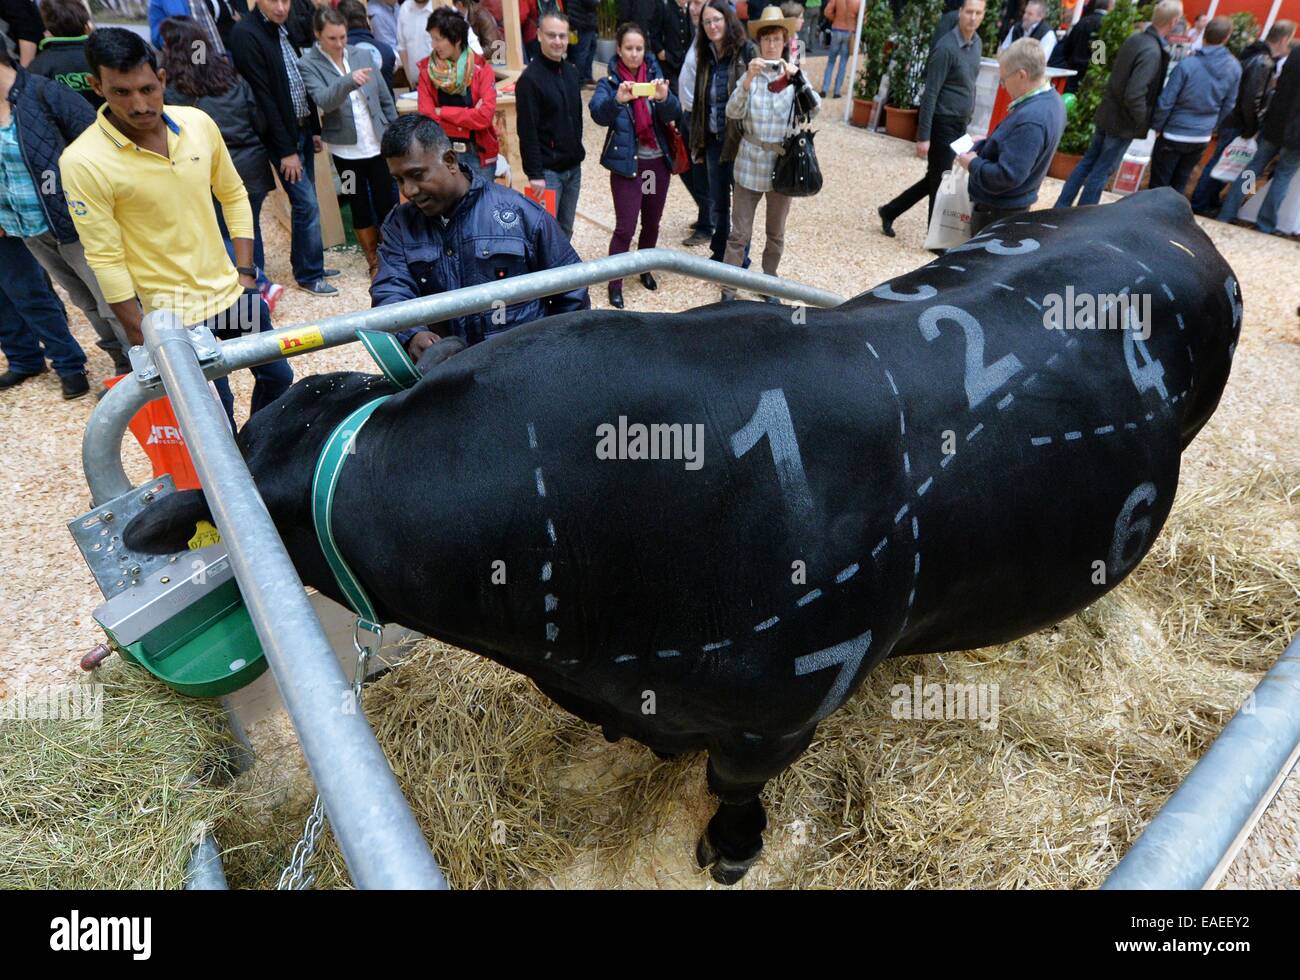 A cow at the EuroTier fair in Hanover, Germany, 12. November 2014. Photo: Frank May Stock Photo